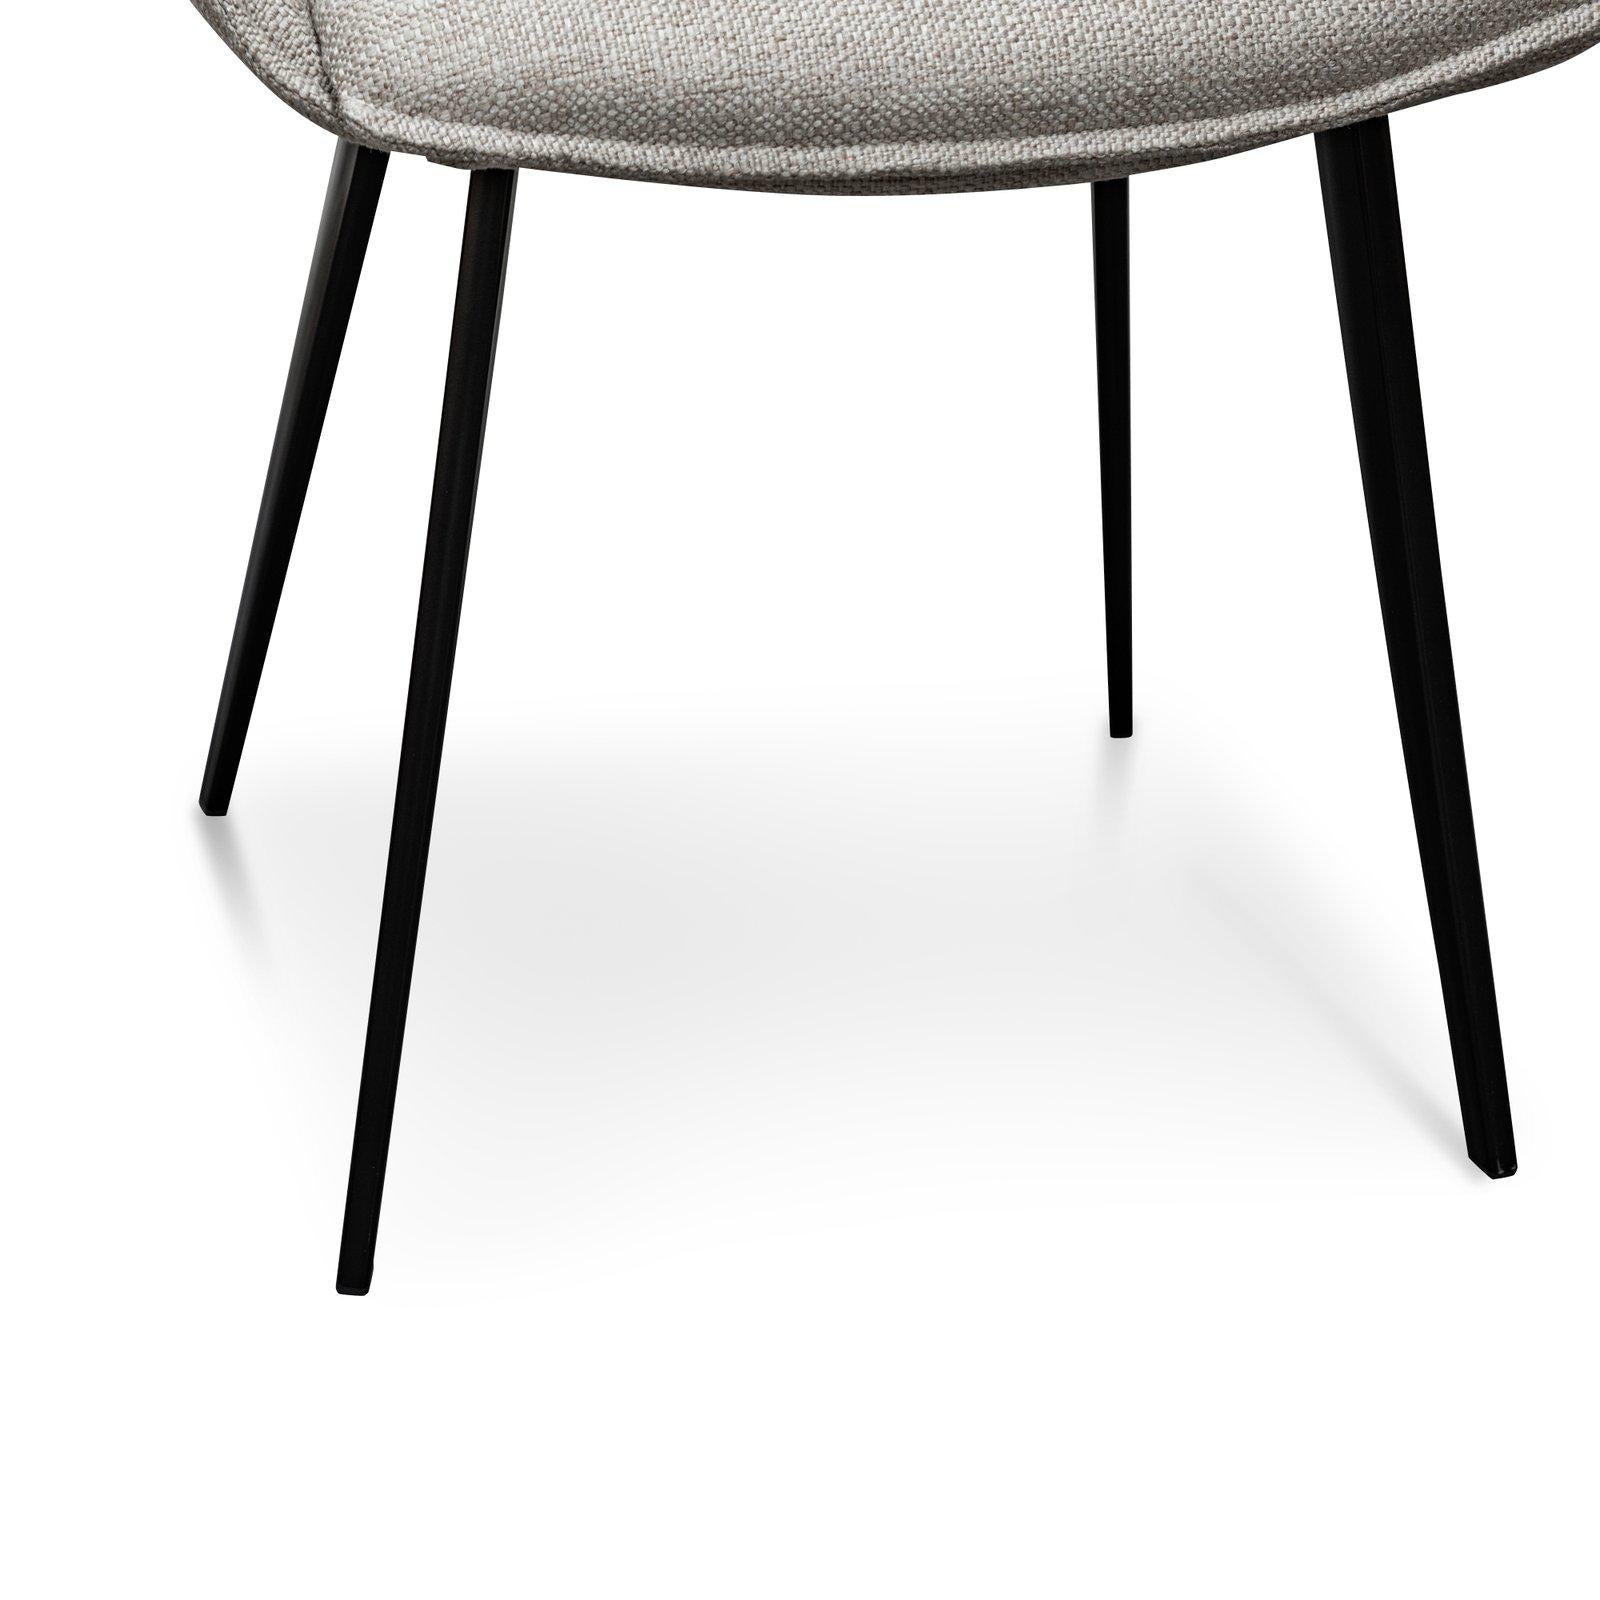 Hillsborough | Fabric & Velvet Modern Dining Chairs | Set Of 2 | Beige